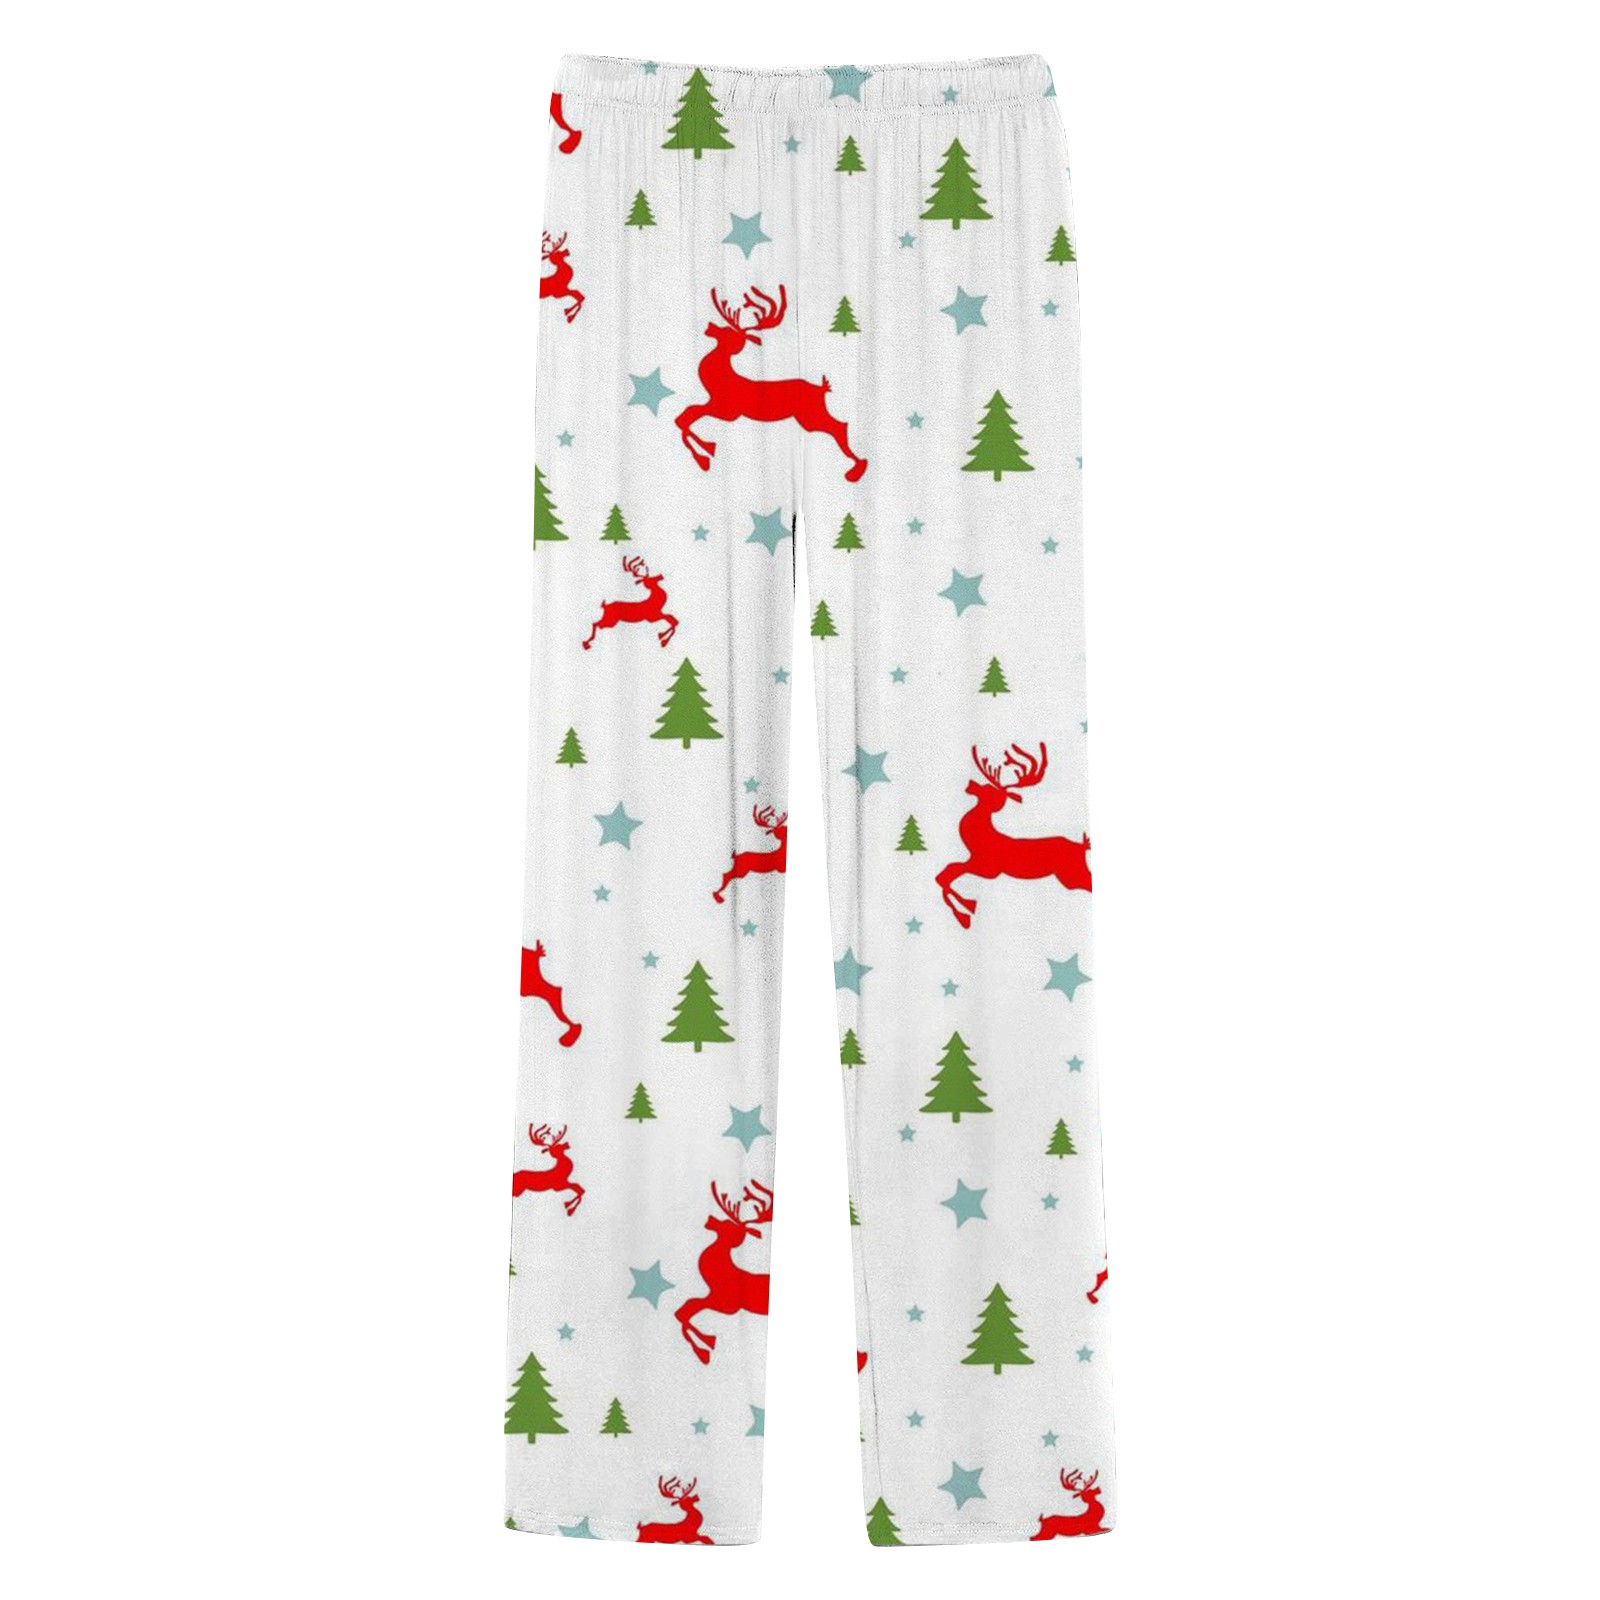 Hwmodou Christmas Men Leisure Pants Pajama Pants With Drawstring ...